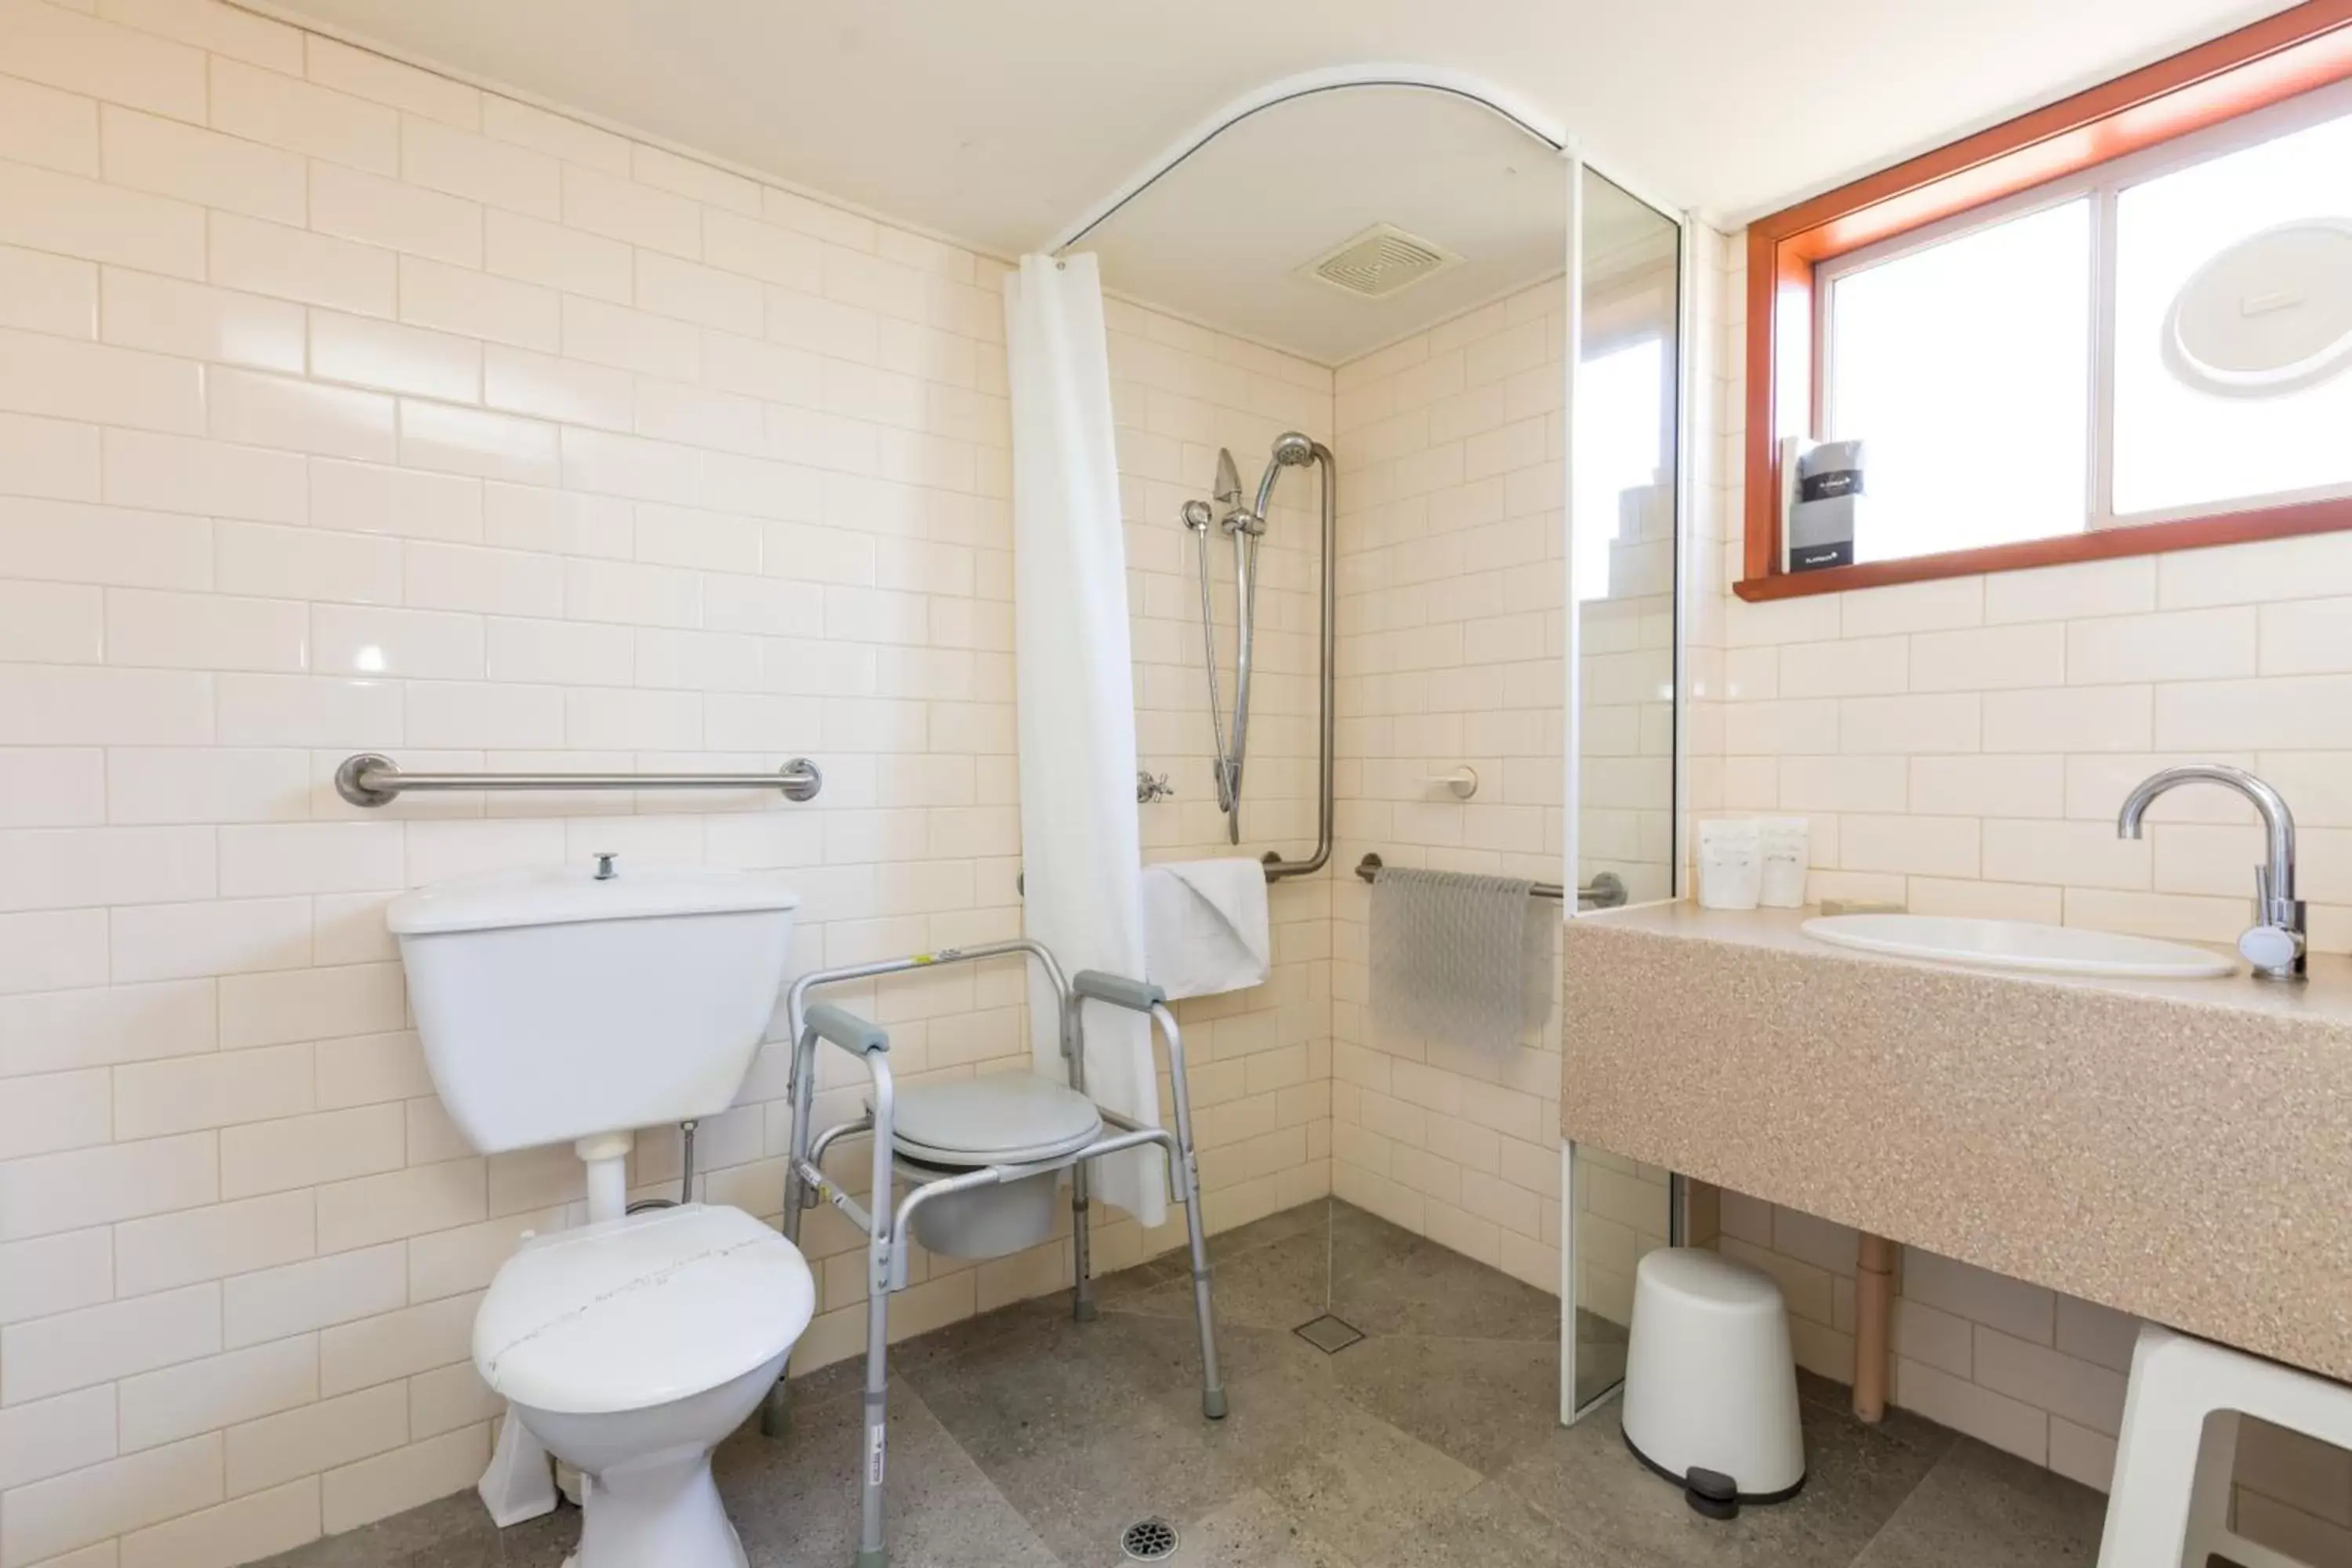 Area and facilities, Bathroom in Hermitage Motor Inn